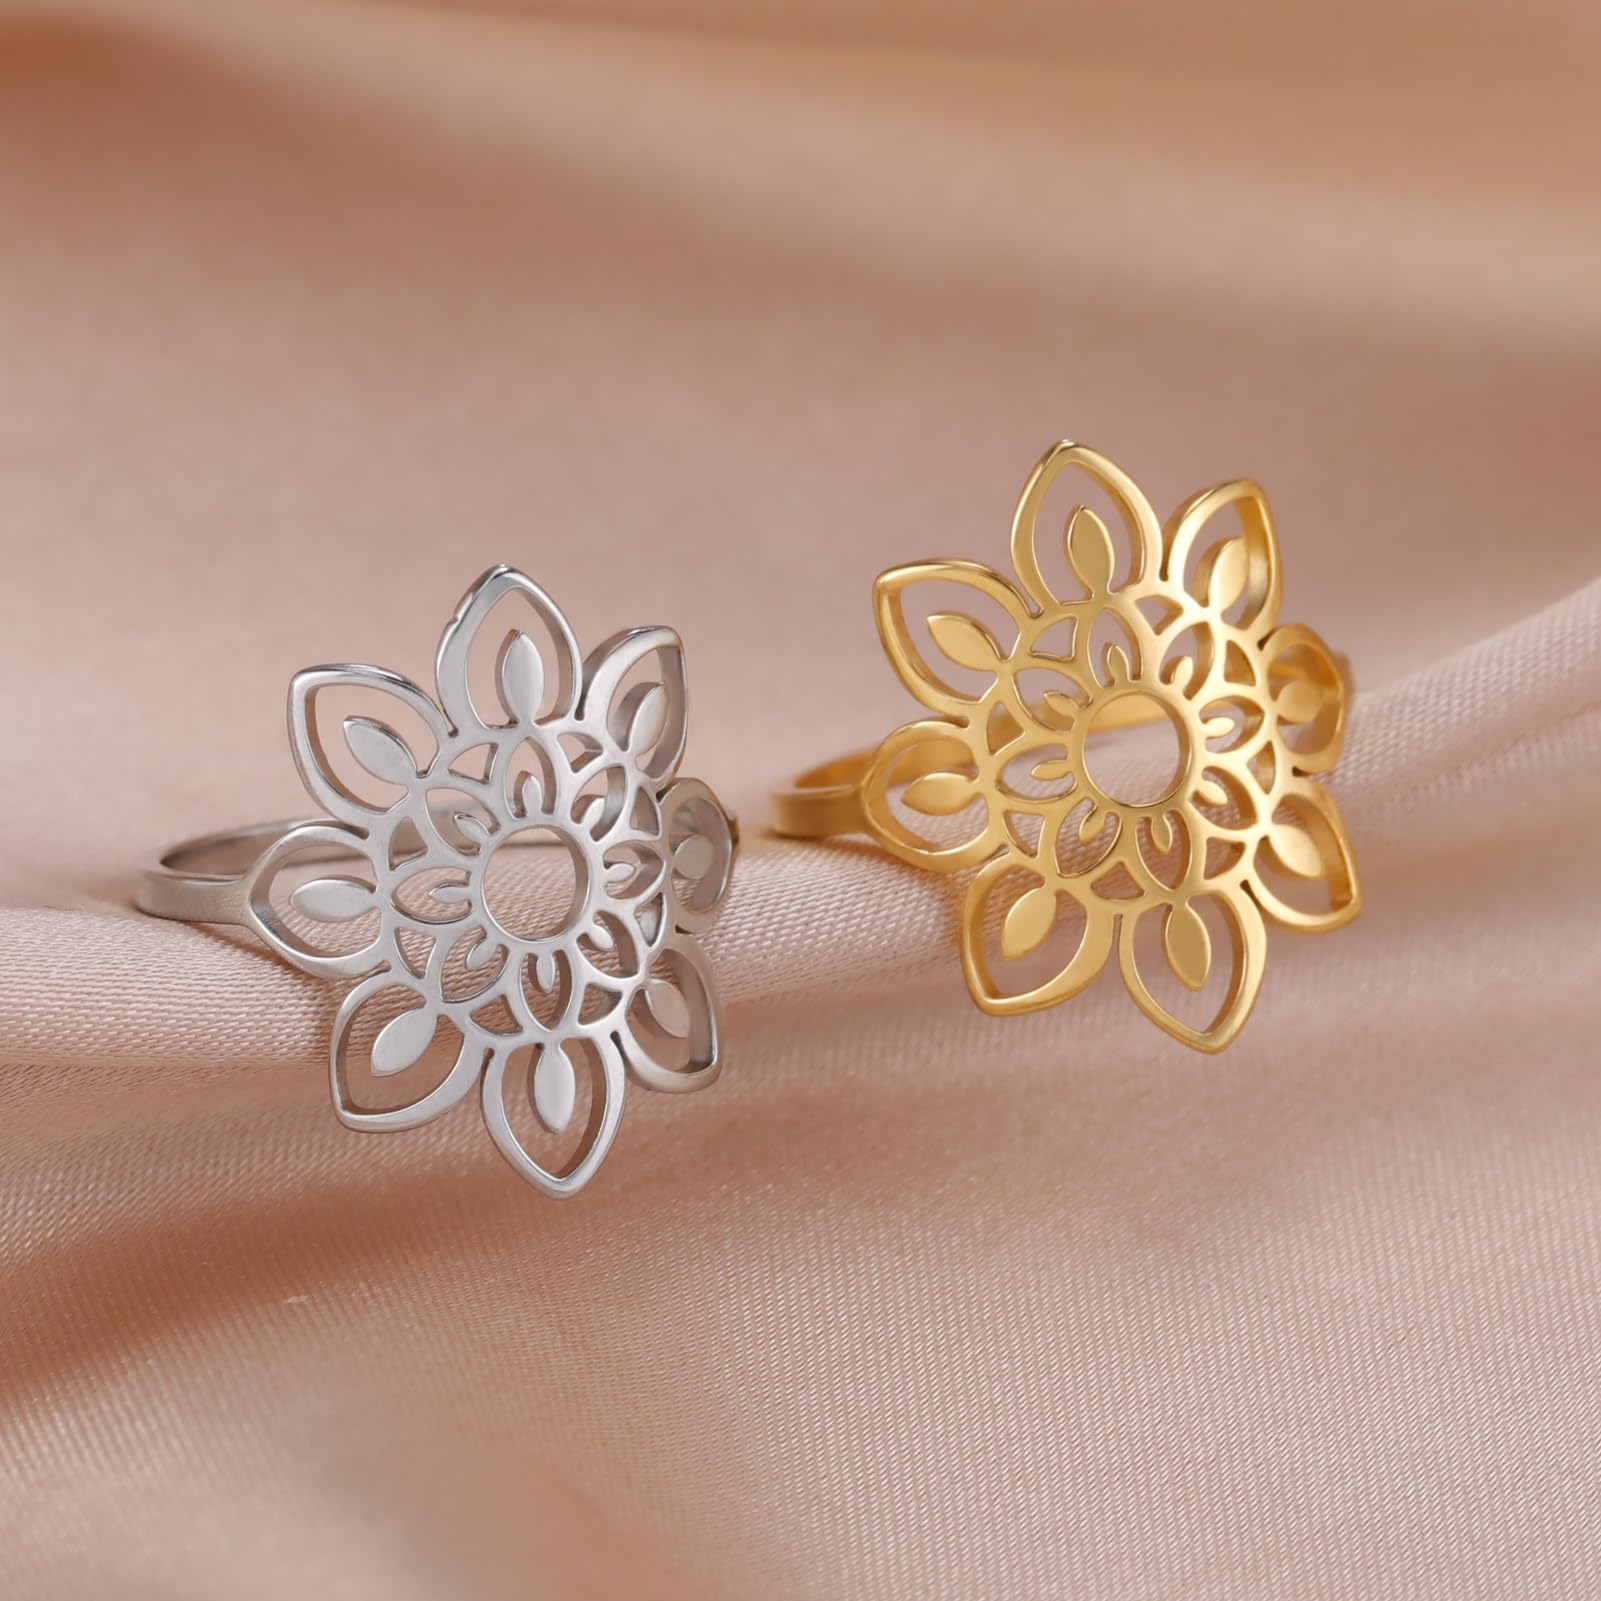 TEAMER Lotus Ring Stainless Steel Hollow Lotus Ring Geometric Ring Simple Jewelry for Women Girls